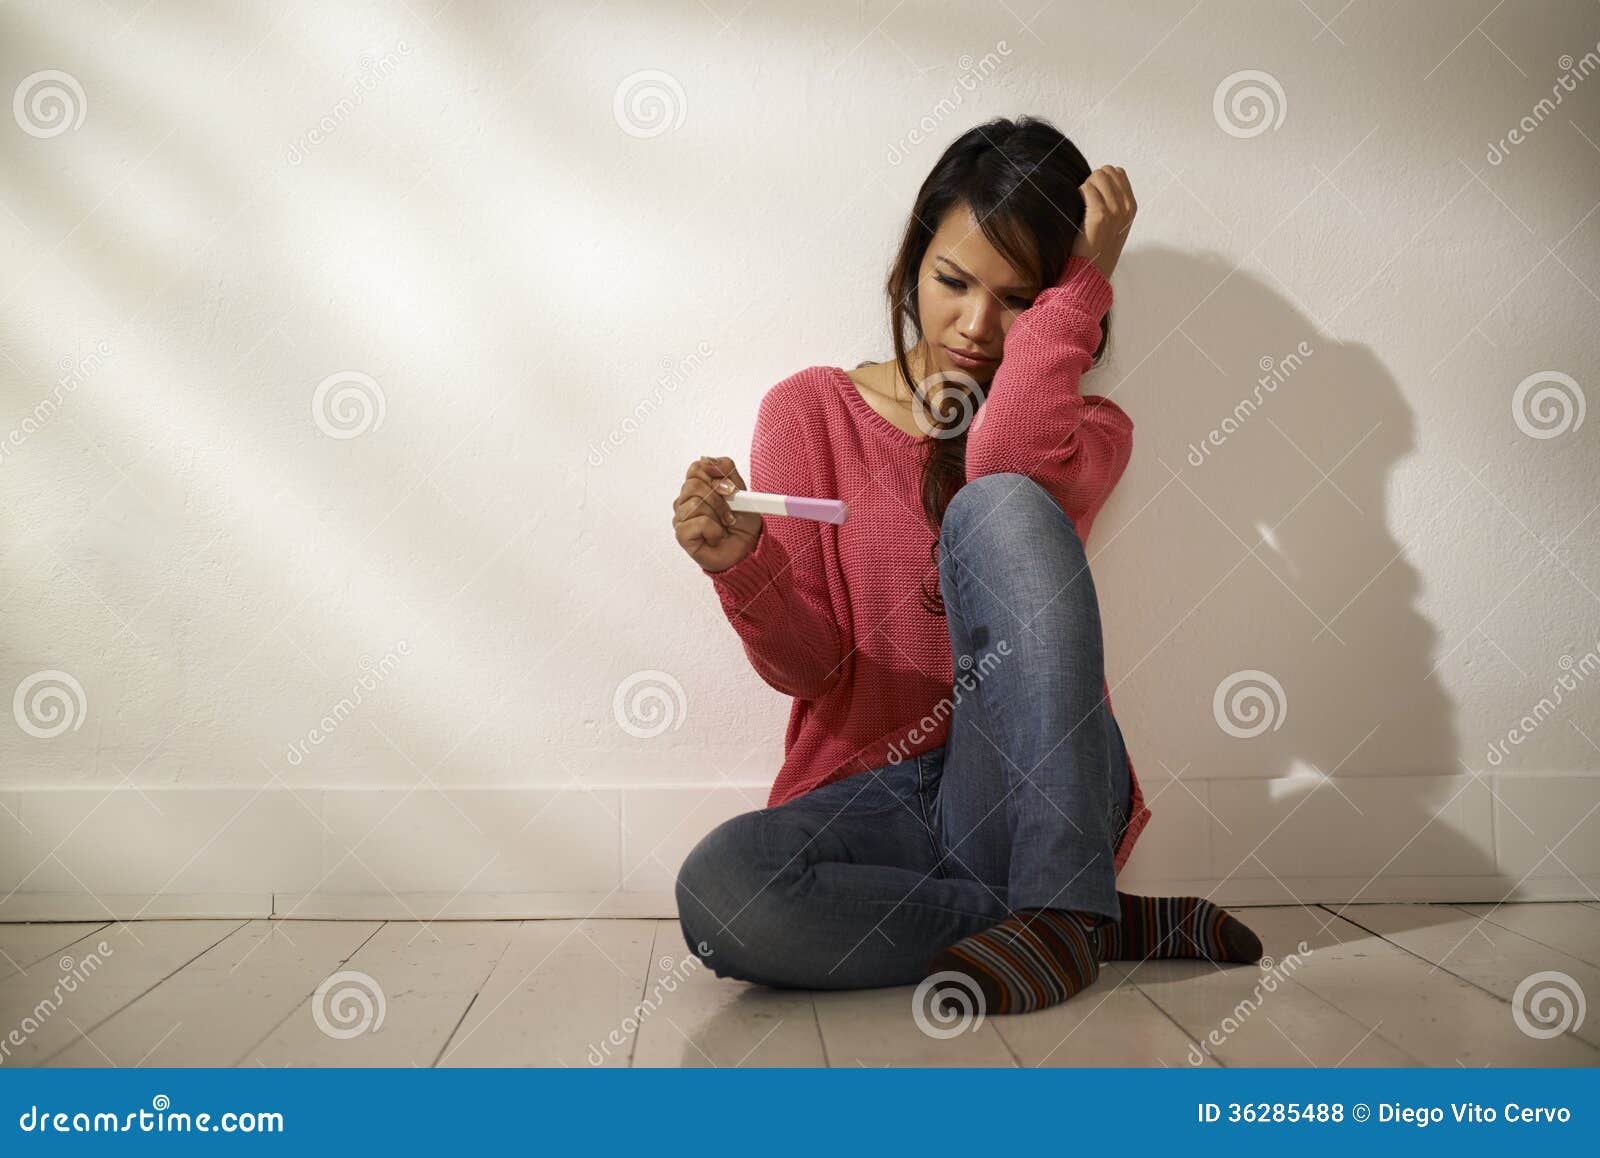 sad asian girl looking at pregnancy test sitting on floor